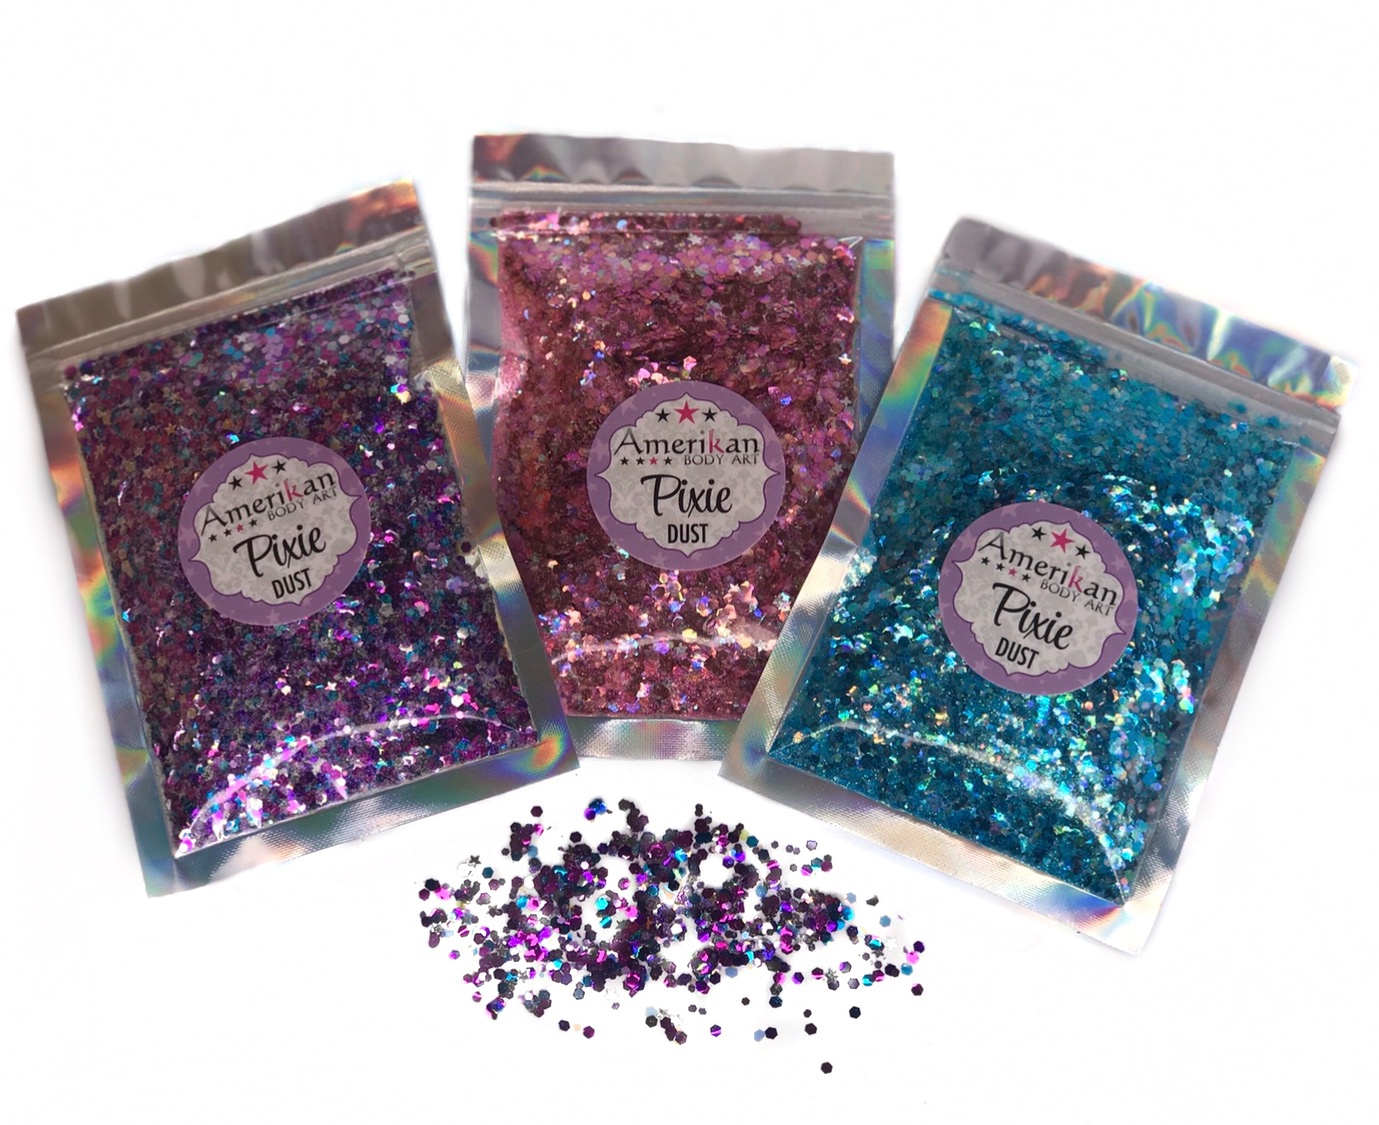 Amerikan Body Art Pixie Paint Glitter Gel - Purple Rain (1 oz/4 oz) 